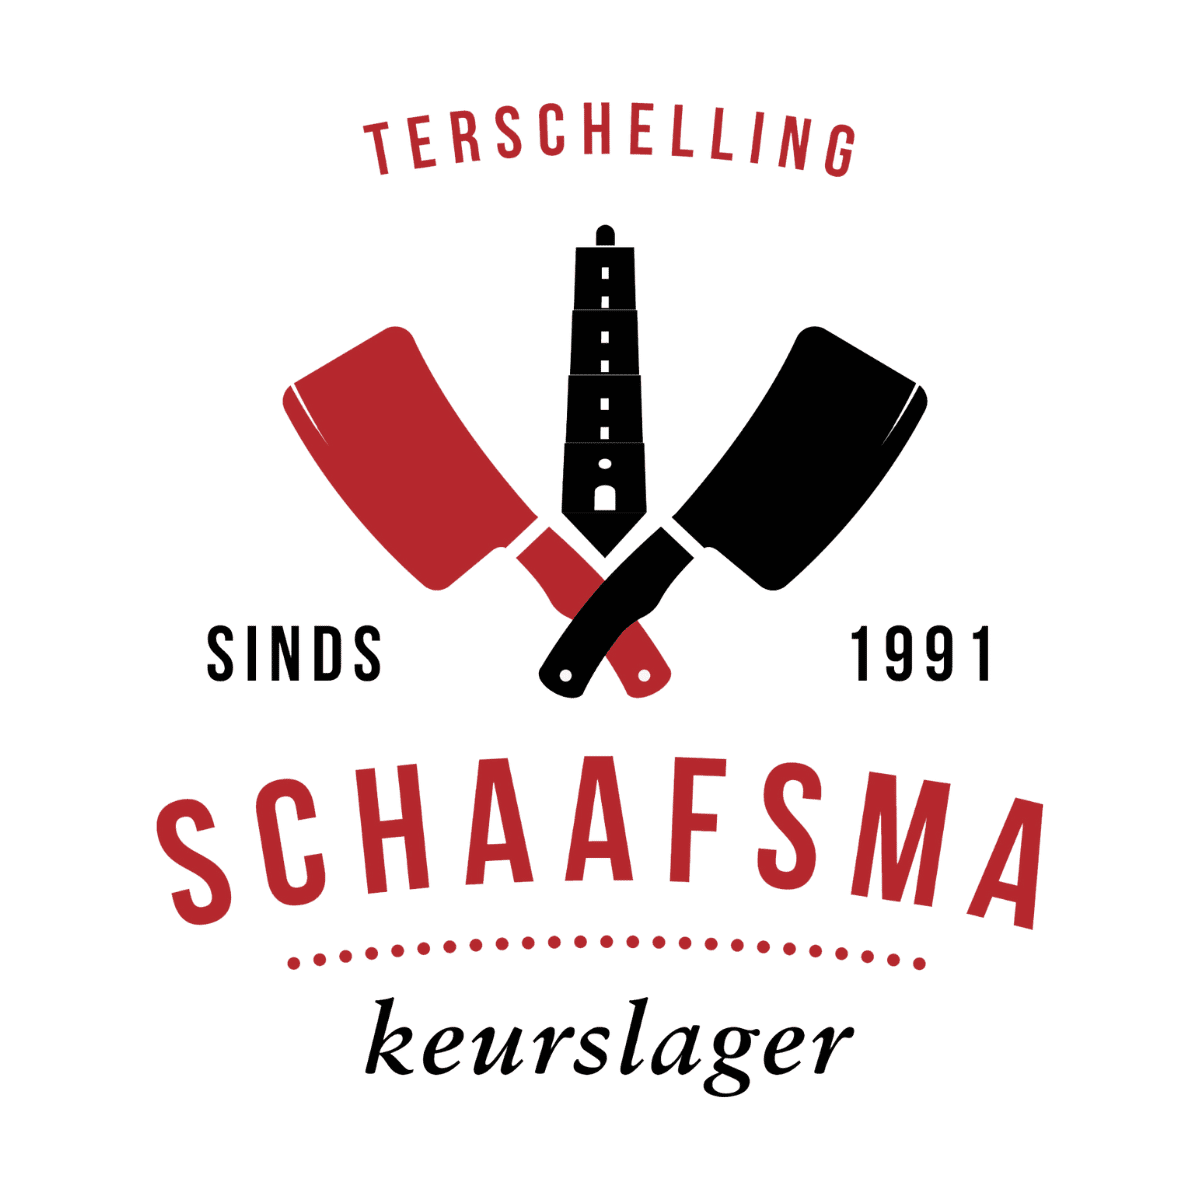 MW Bedrijfskleding Schaafsma keurslager review